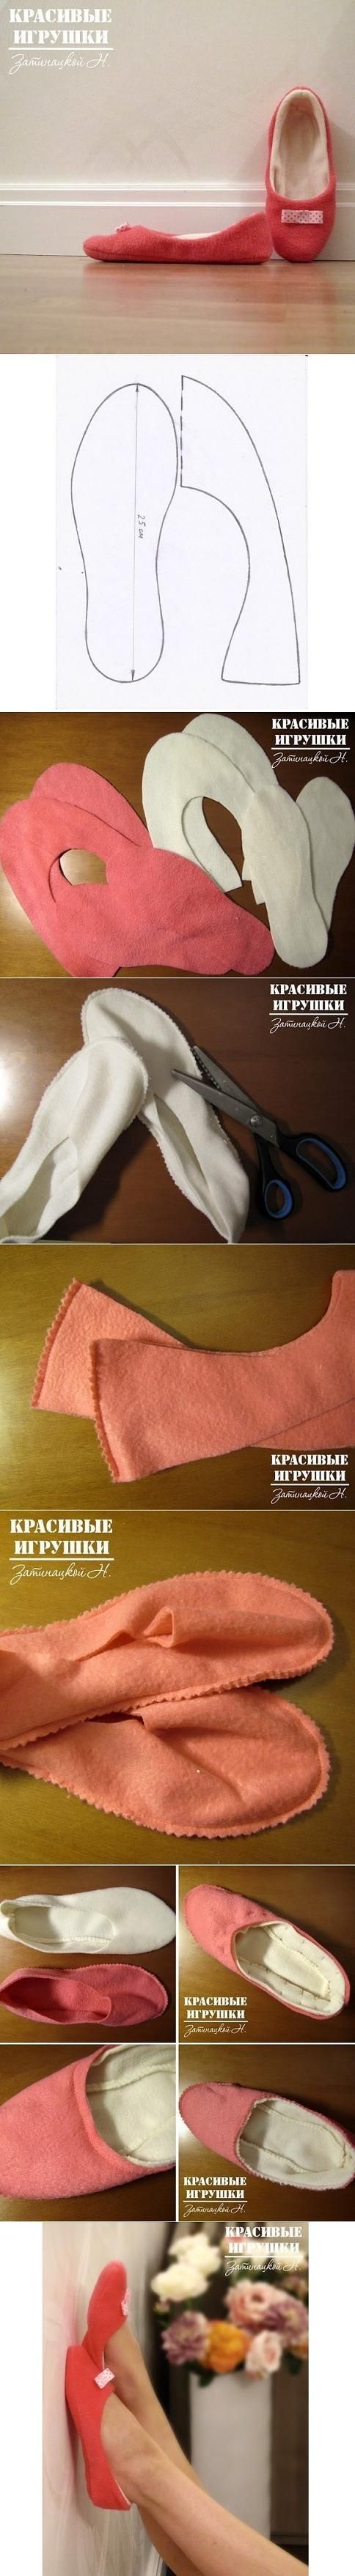 DIY Sew Slippers